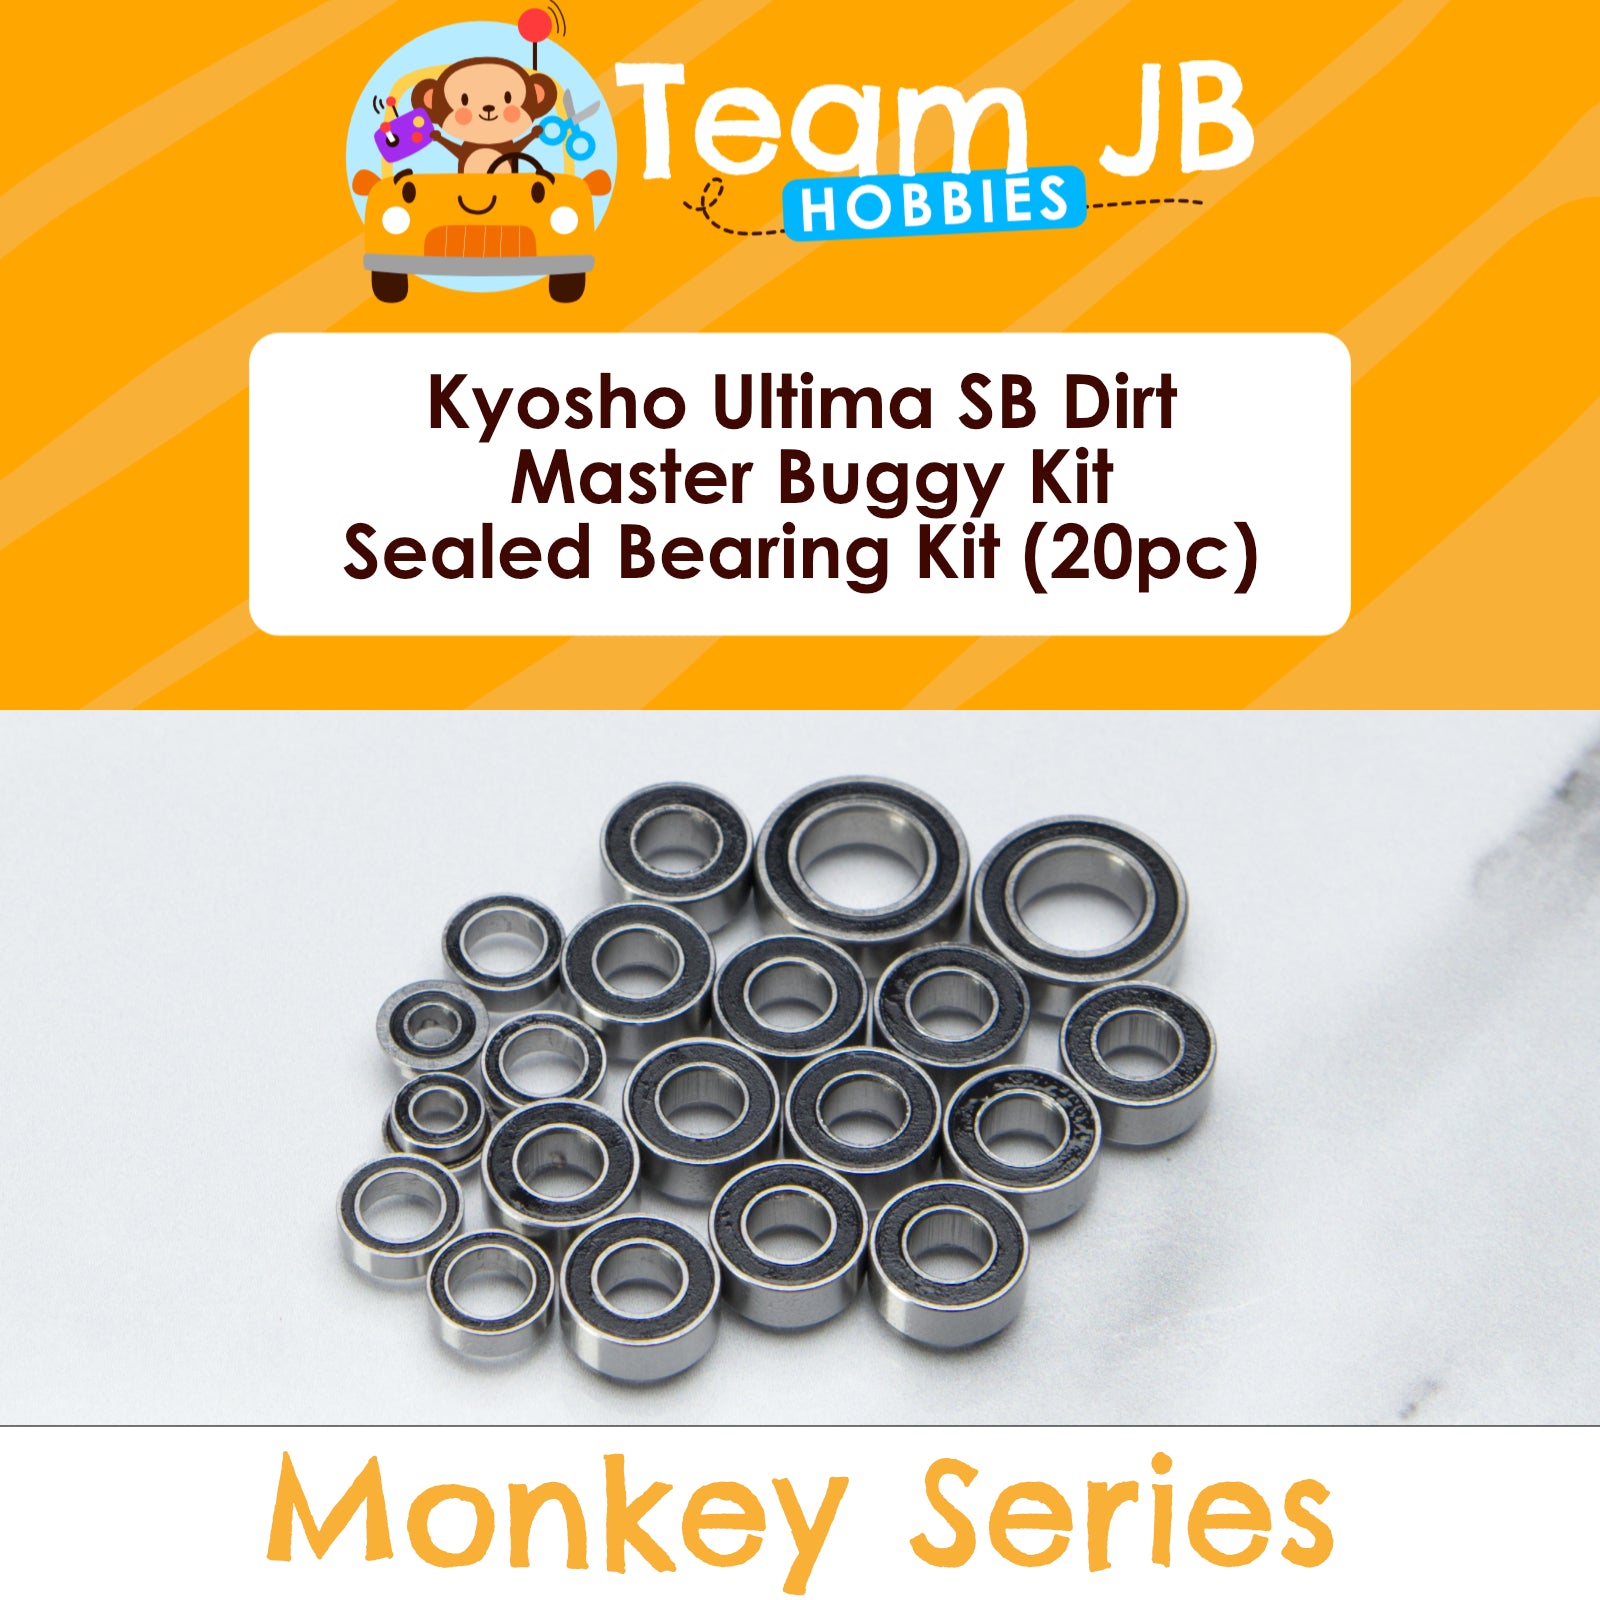 Kyosho Ultima SB Dirt Master Buggy Kit - Sealed Bearing Kit